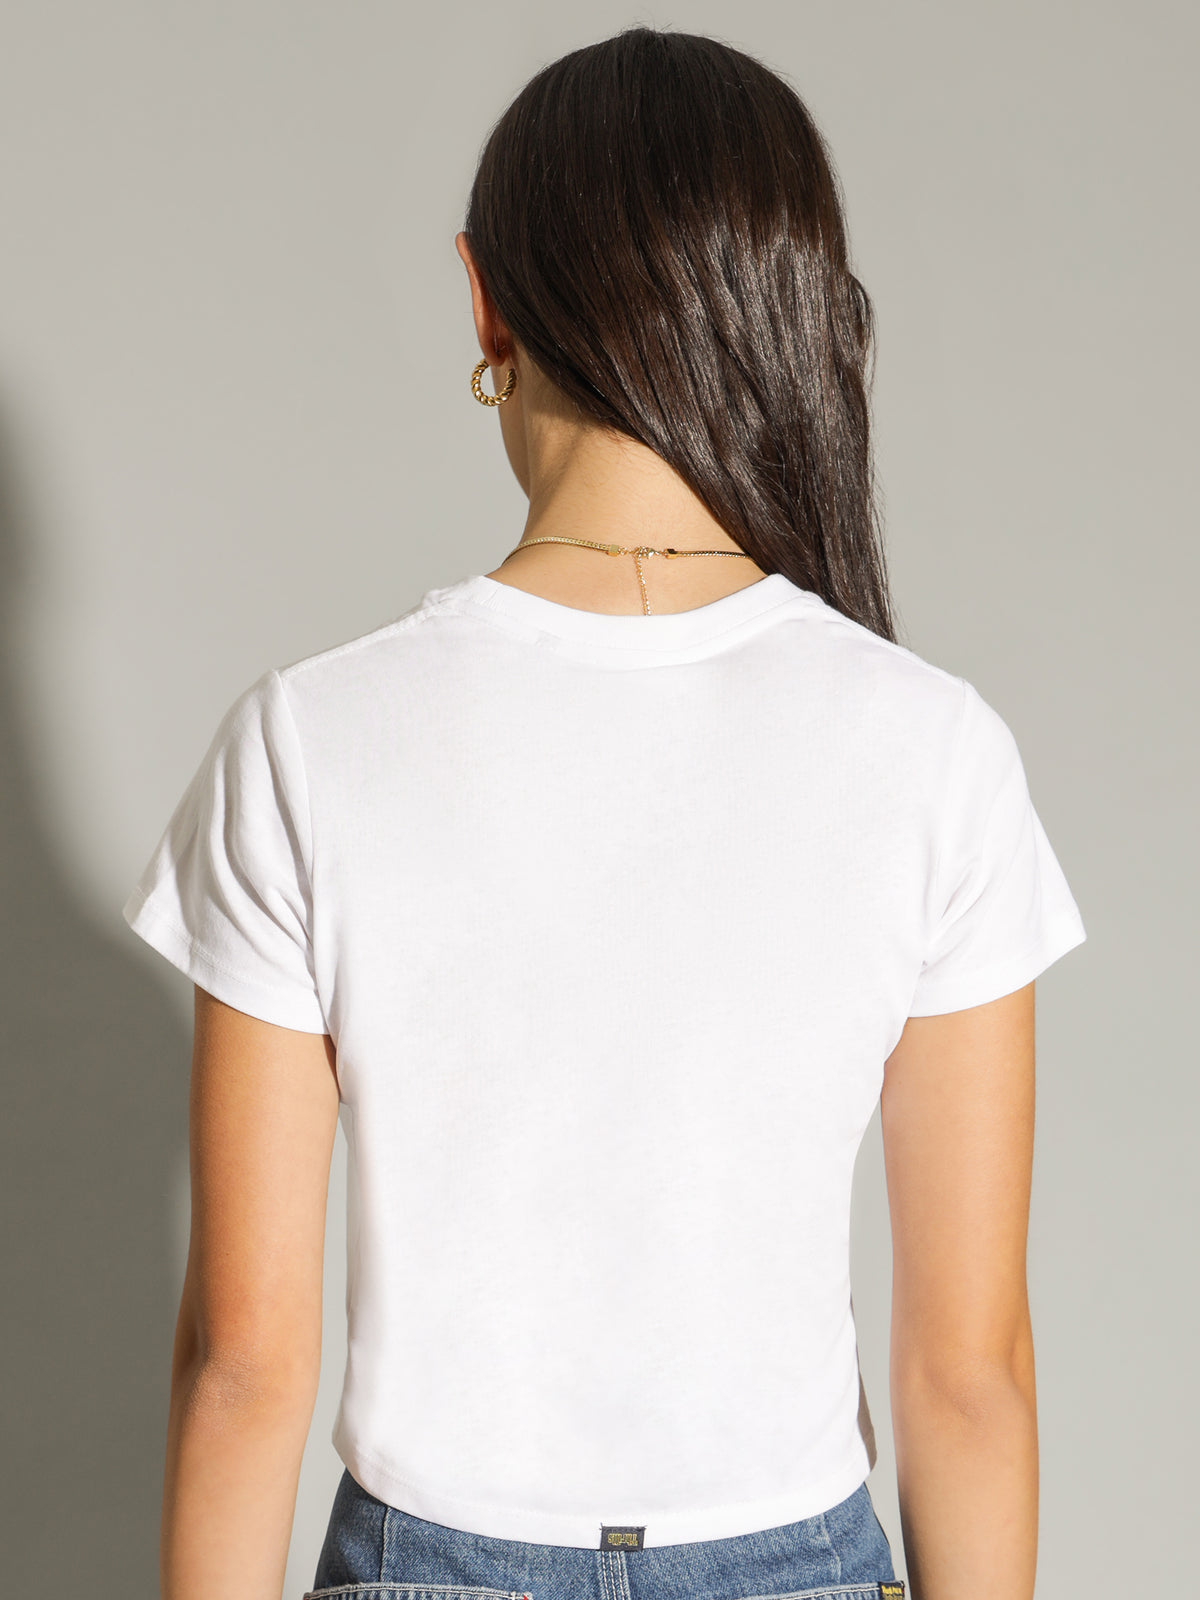 Hard Yakka Mini Fit T-Shirt in White